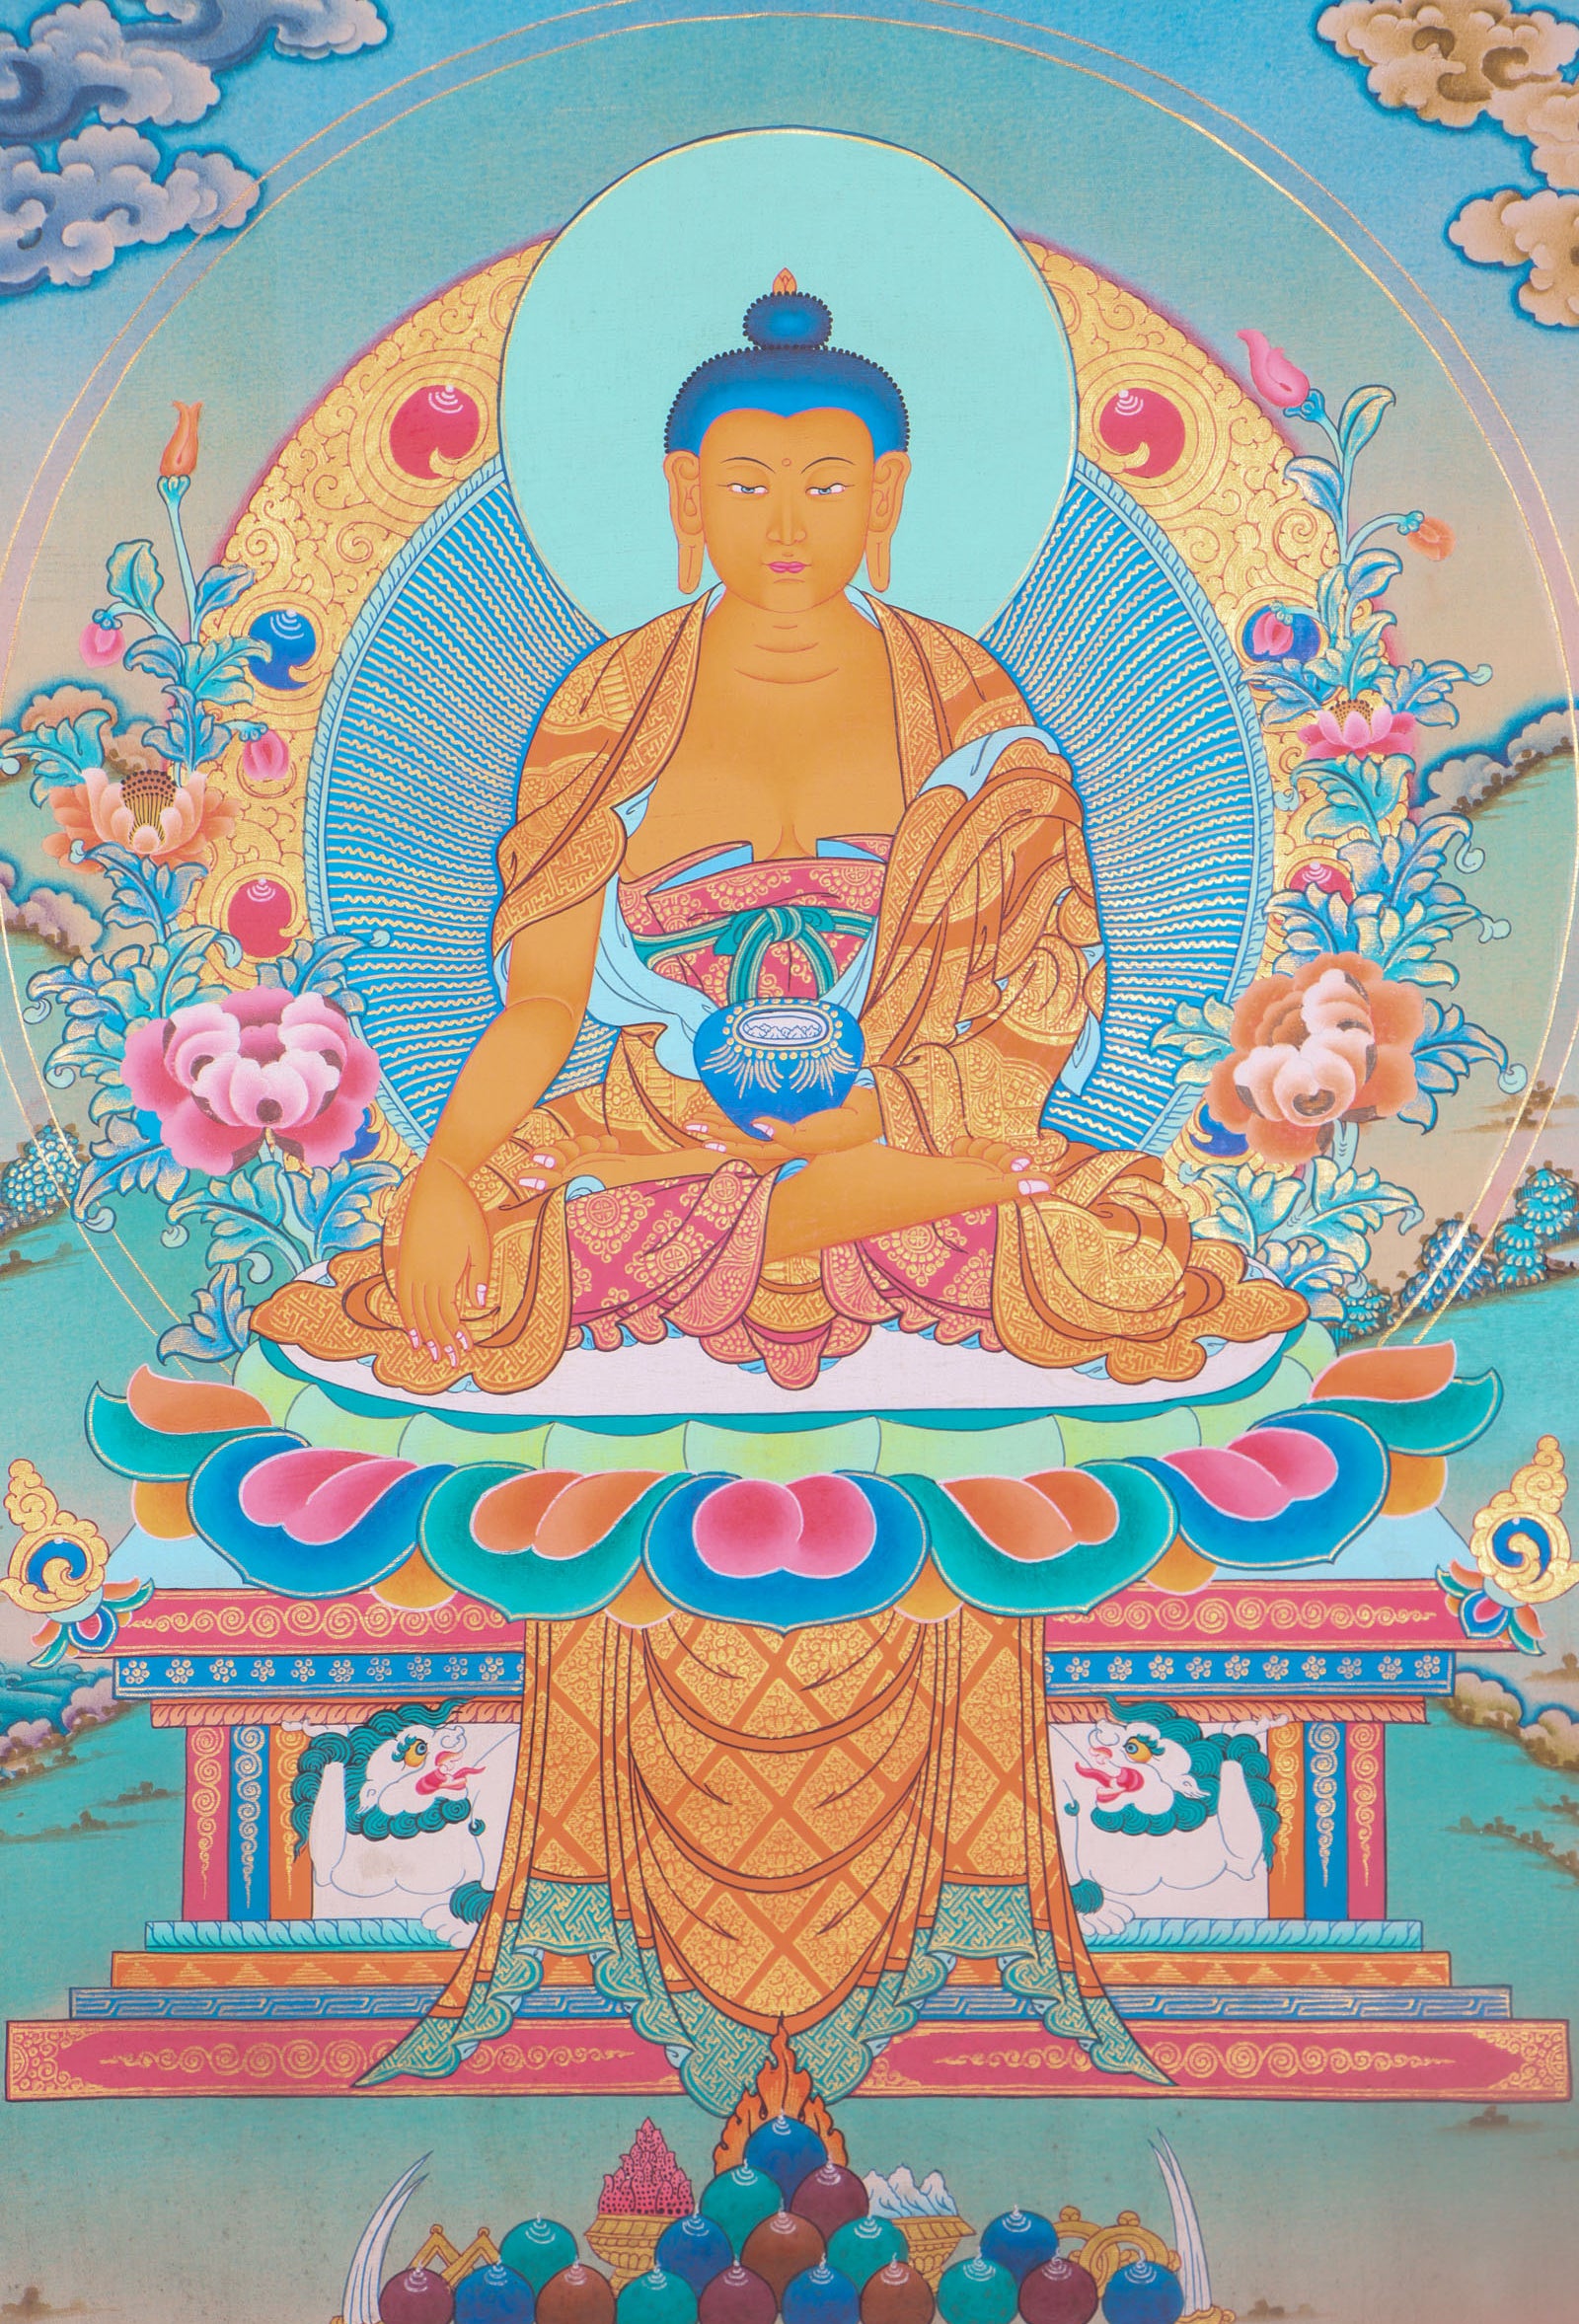 Shakyamuni Buddha Thangka Painting aids in meditating, inspiring reflection and deepening understanding of wisdom.